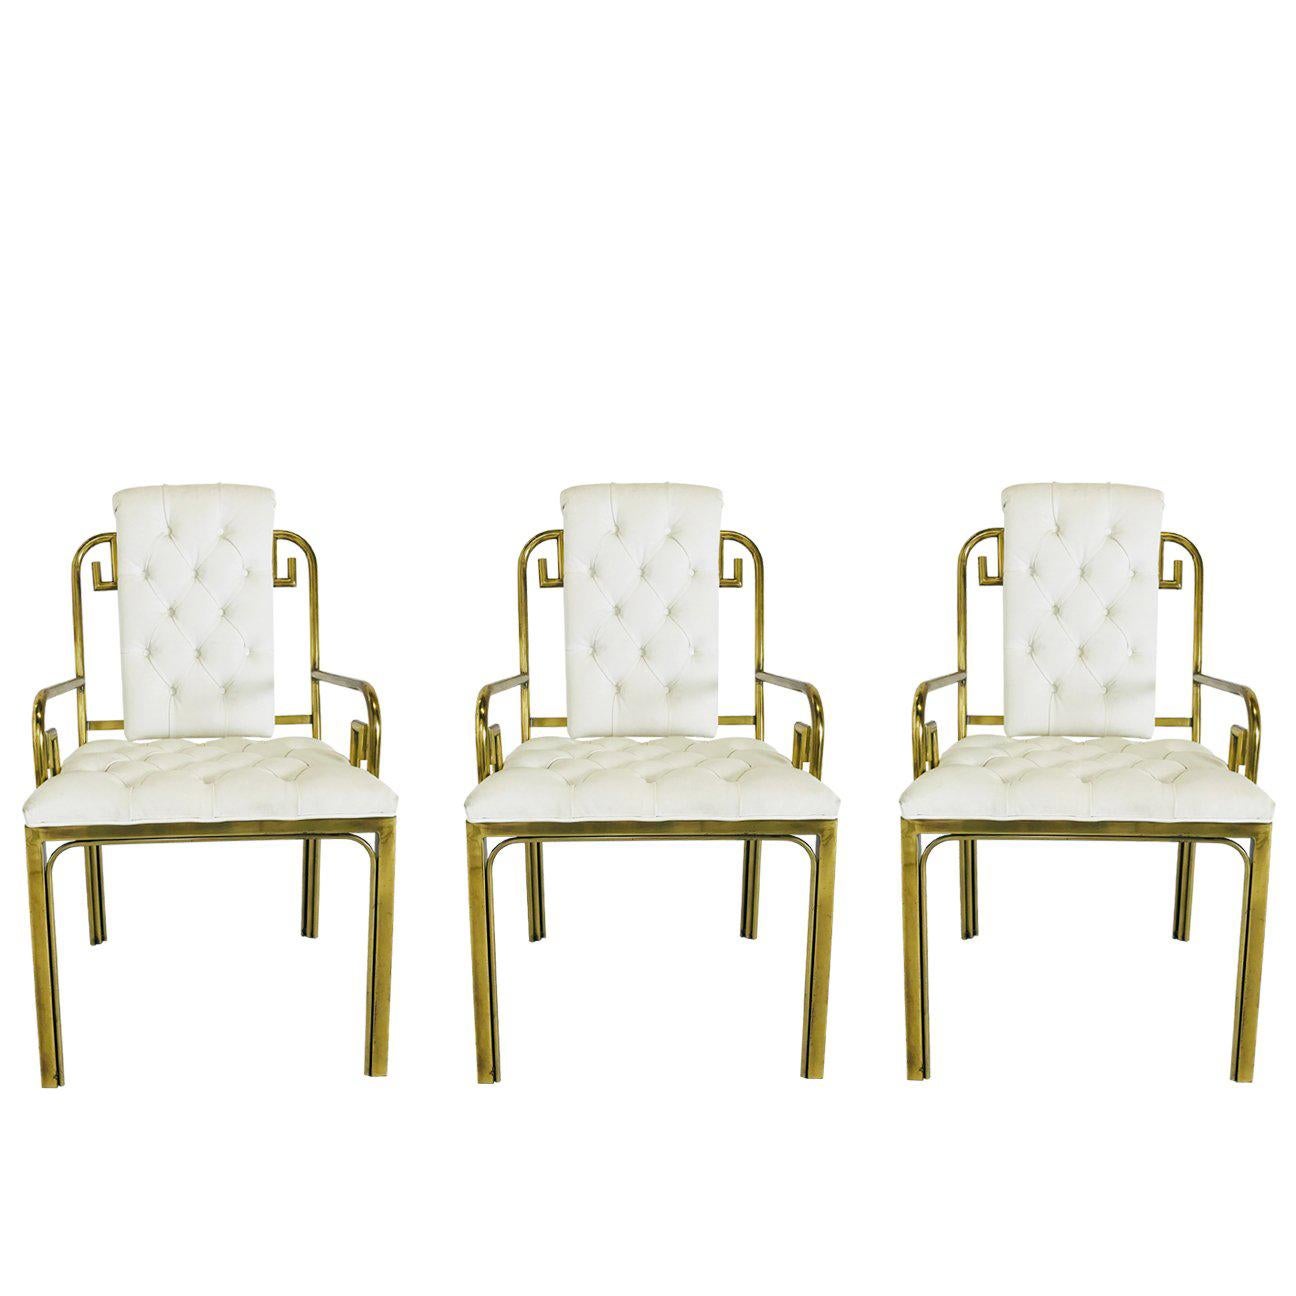 Set of Three Brass Greek Key Chairs by Mastercraft